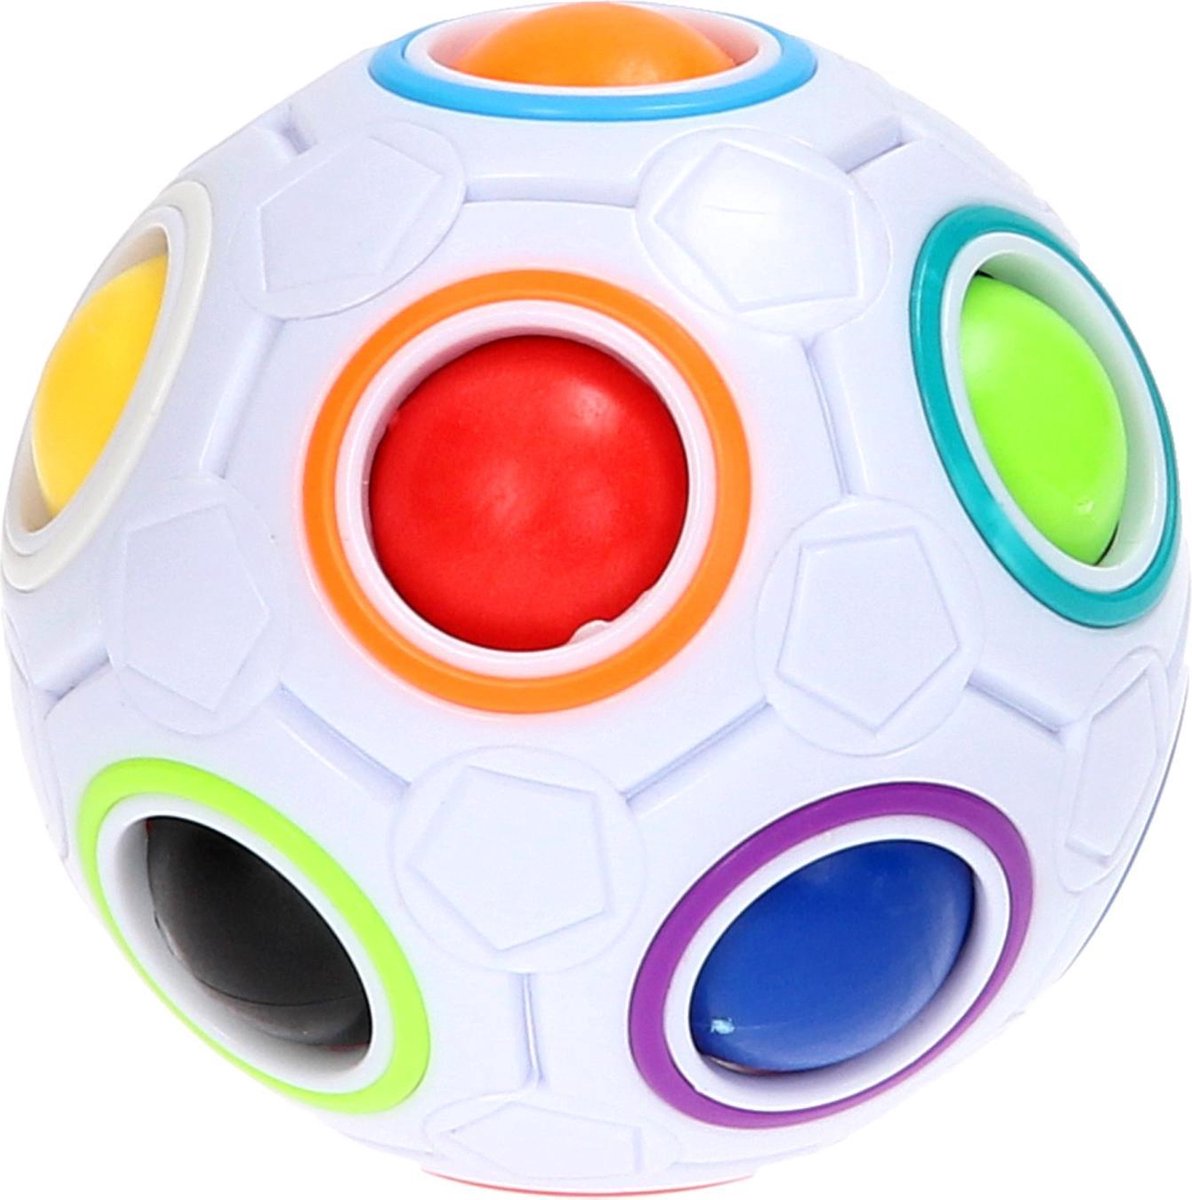 Toys Amsterdam behendigheidsspel Magic Ball junior 6,5 cm - Wit